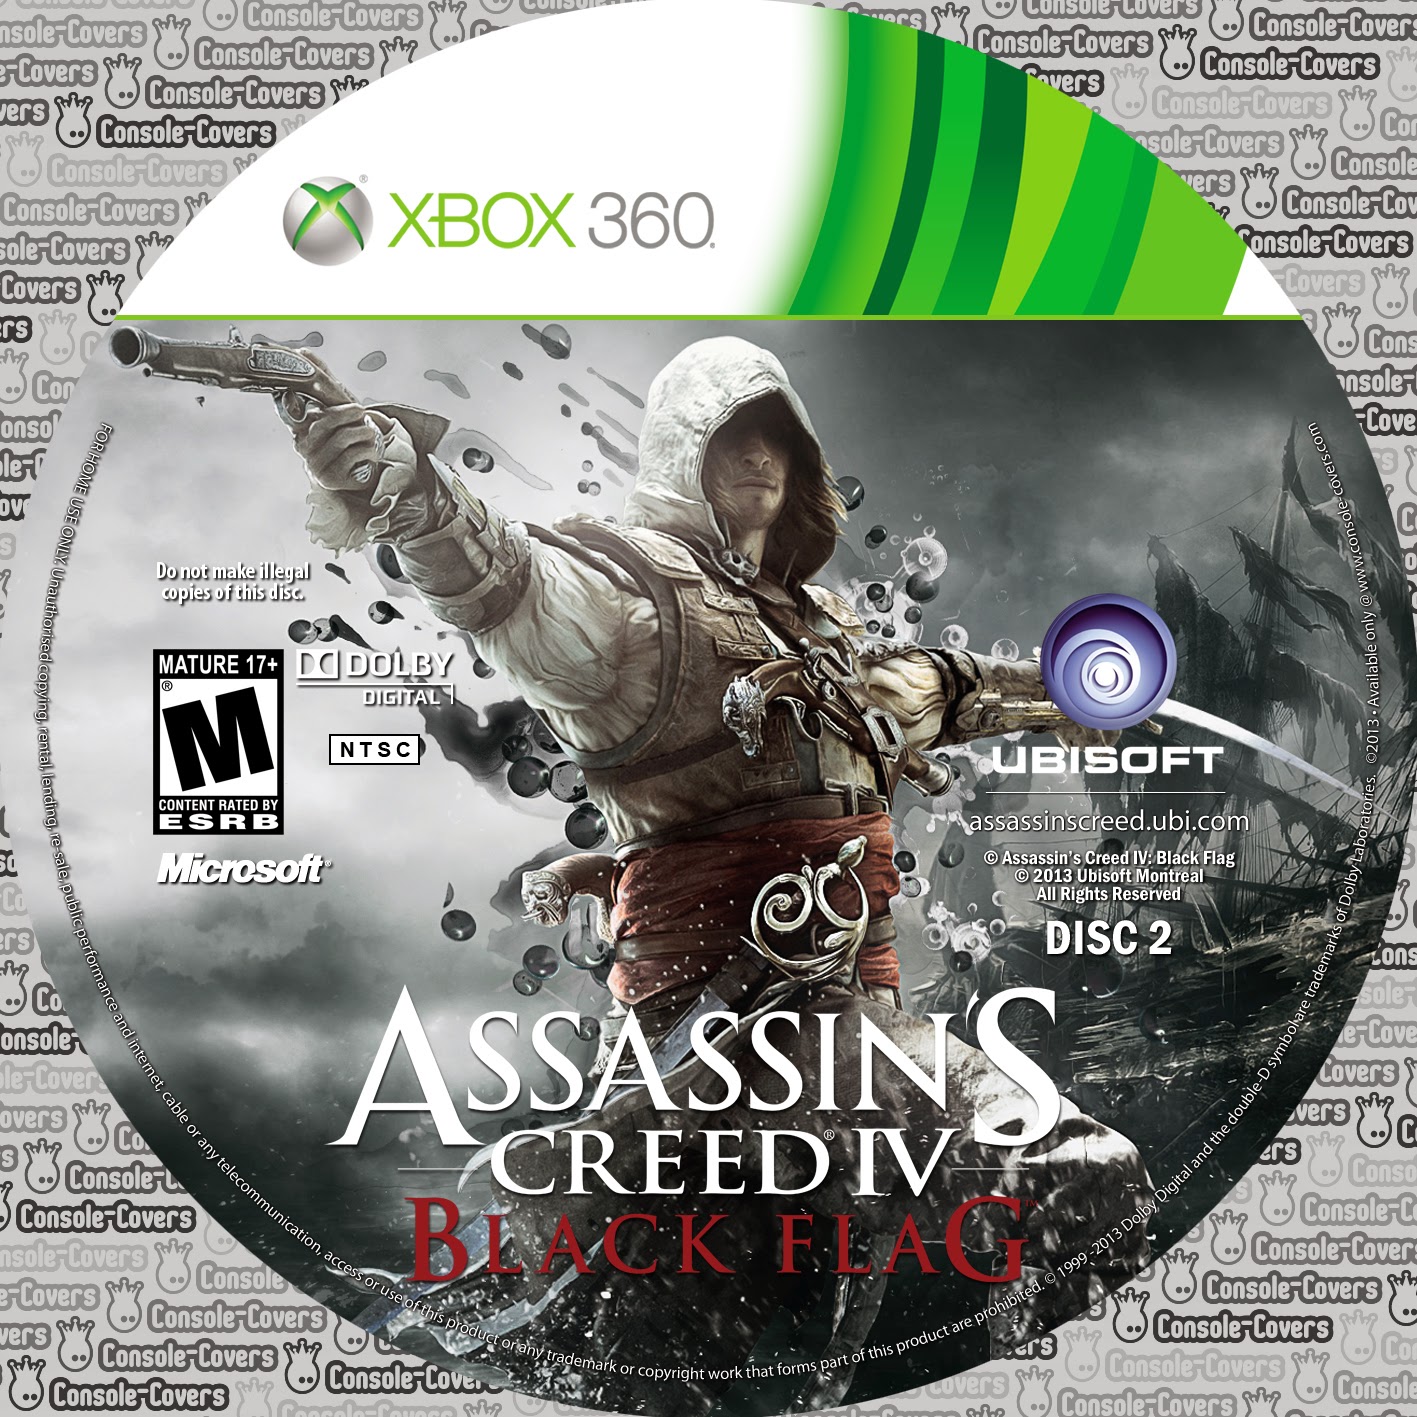 Код игры 360. Assassin's Creed Xbox 360 диск. Диски для Xbox 360 ассасин. Assassins Creed 2 Xbox 360 пиратский диск. Пиратские диски хбокс 360.